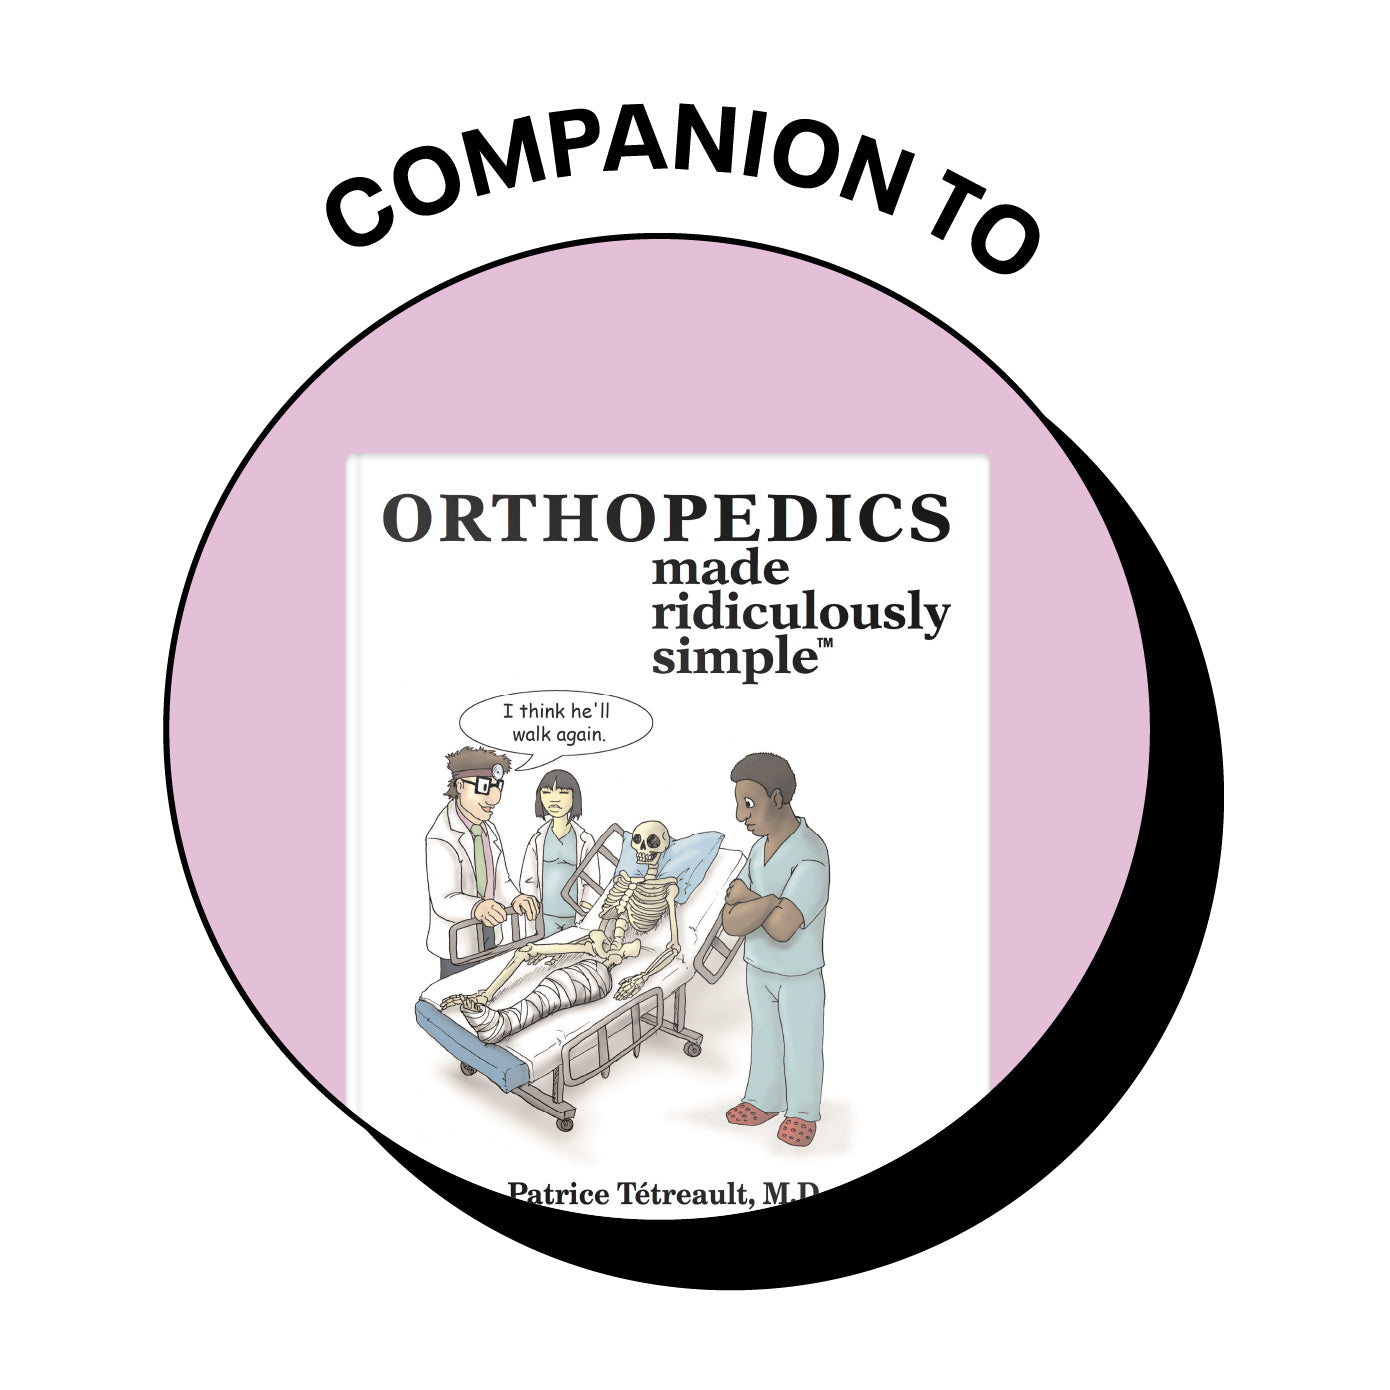 Atlas of Orthopedics